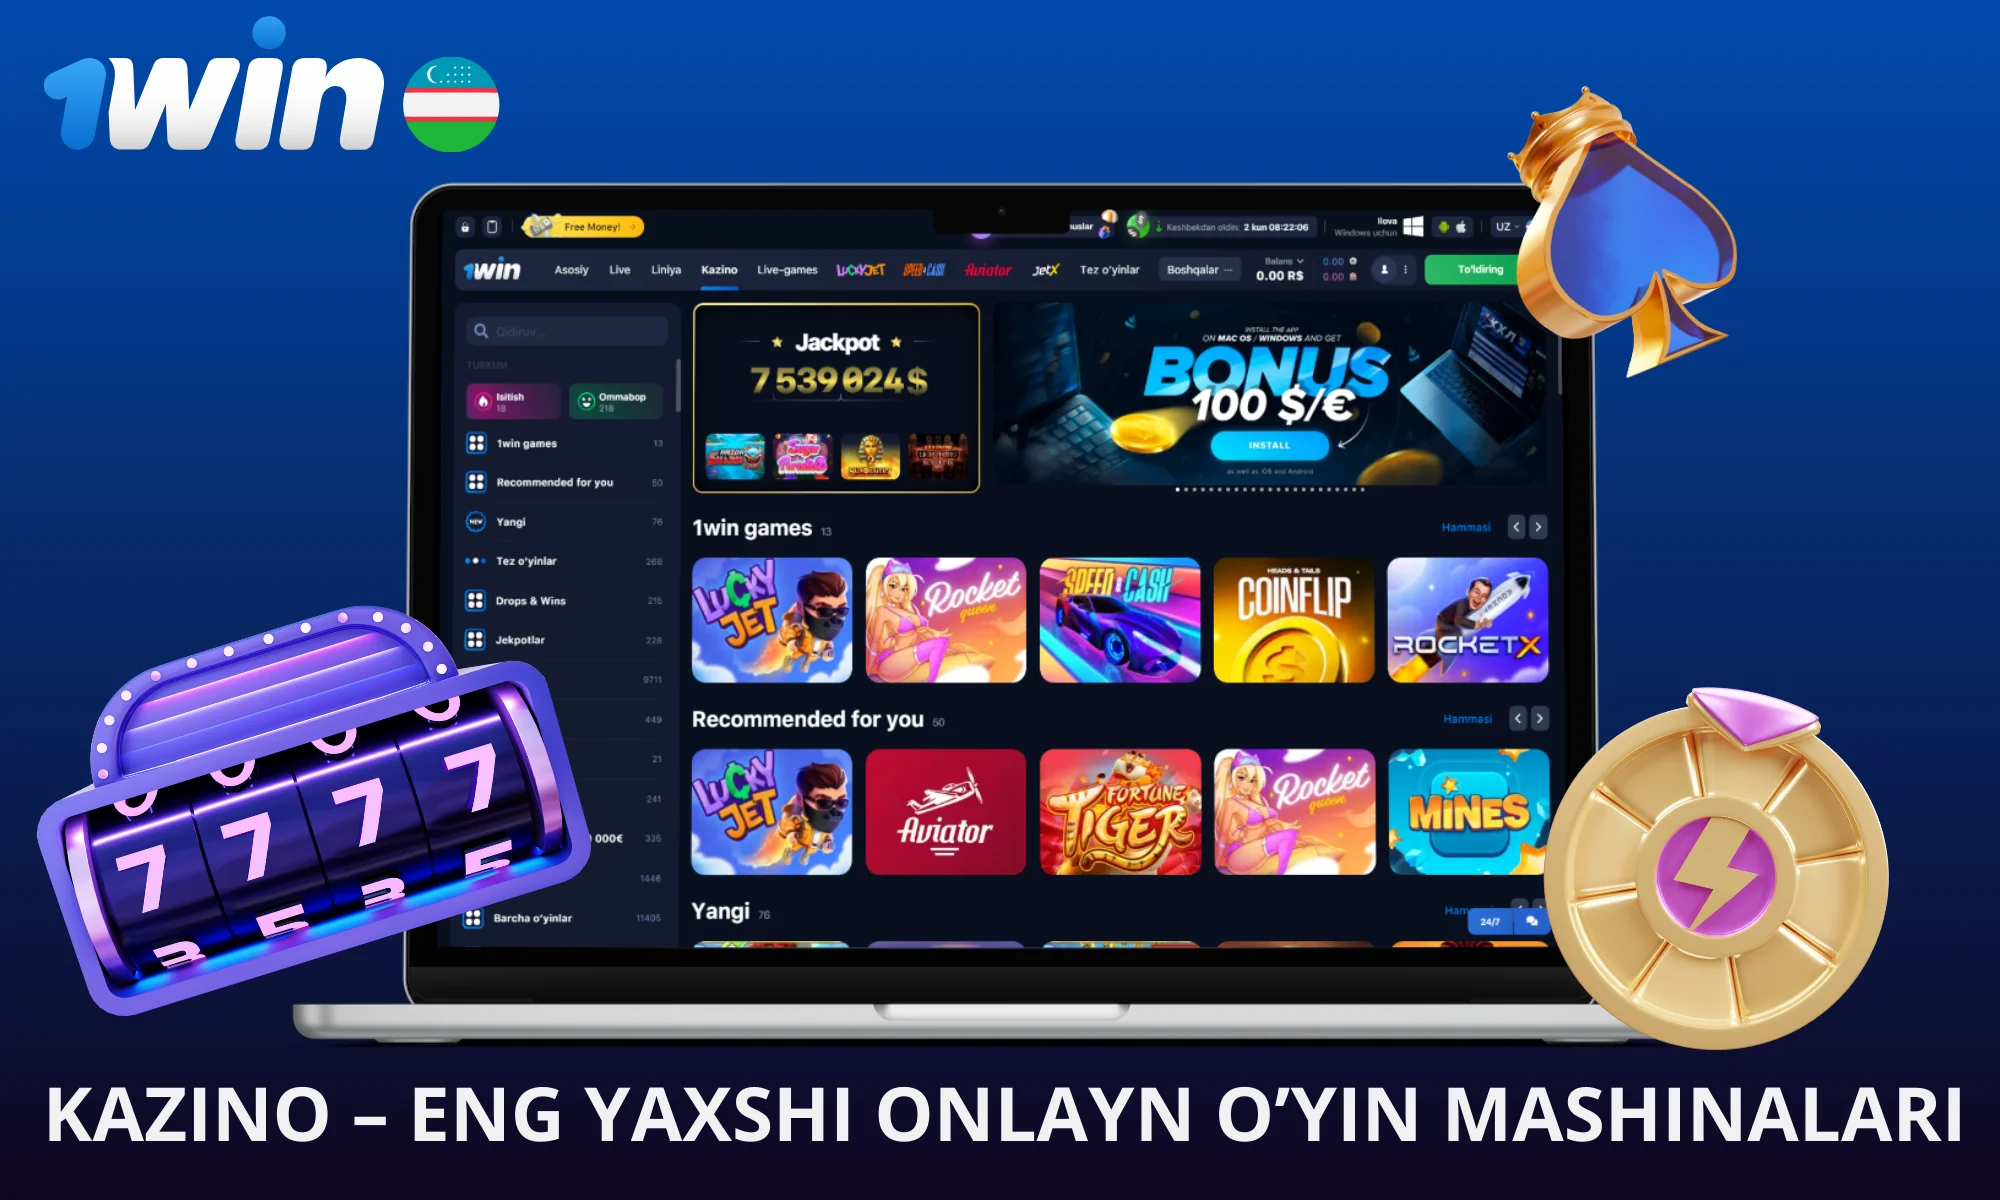 Your Weakest Link: Use It To Eng yaxshi onlayn kazino qanday tanlanadi?